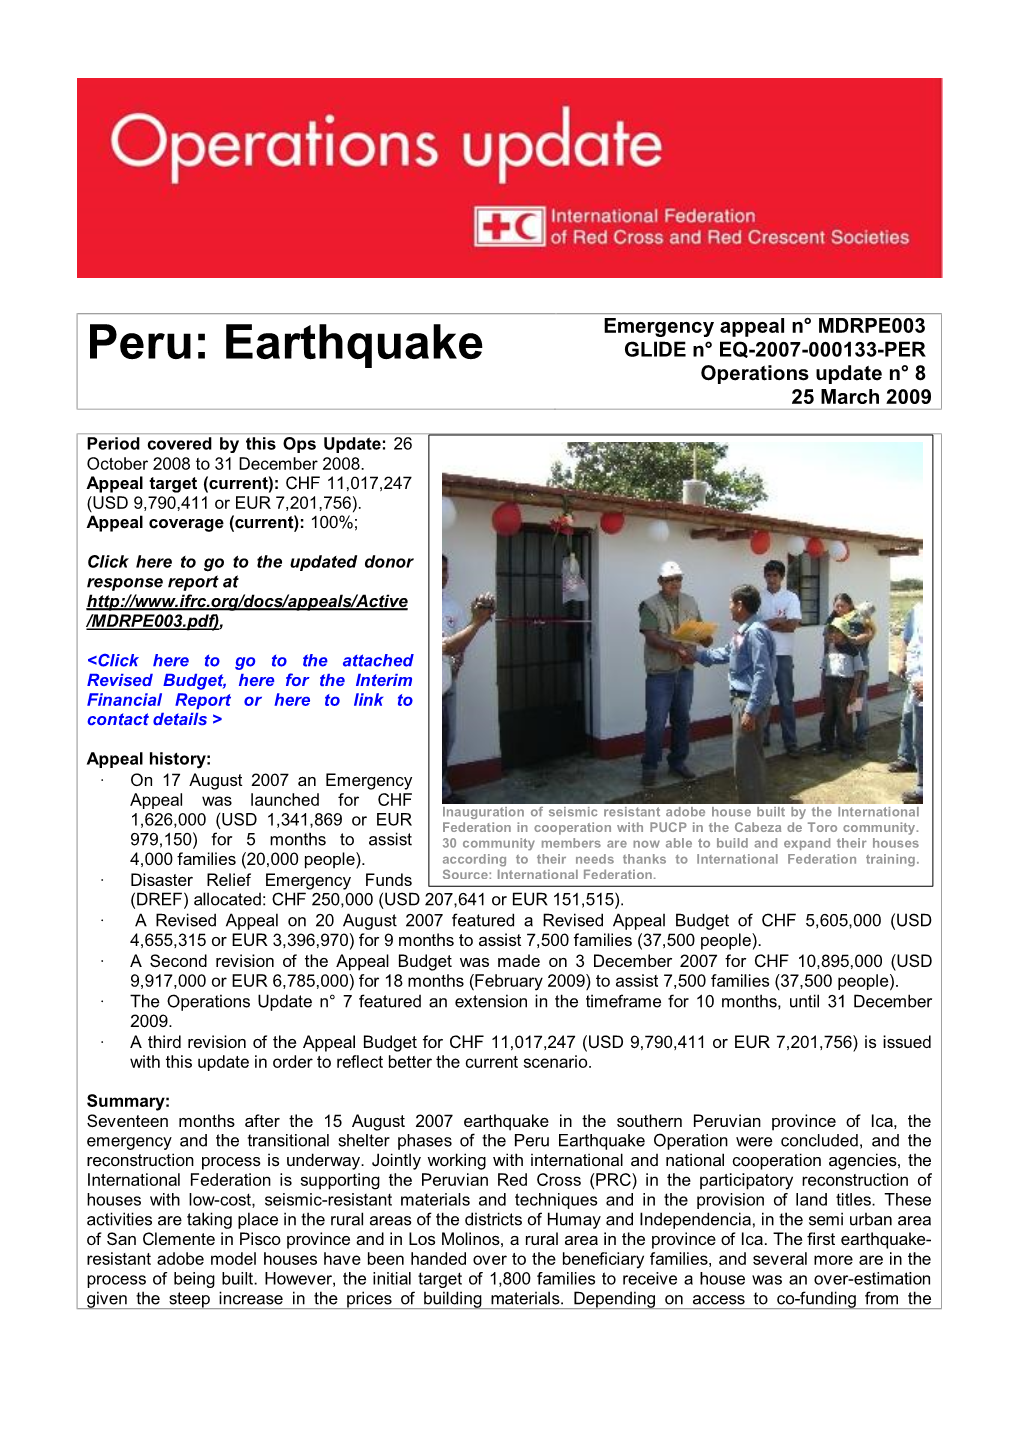 Peru: Earthquake GLIDE N° EQ-2007-000133-PER Operations Update N° 8 25 March 2009